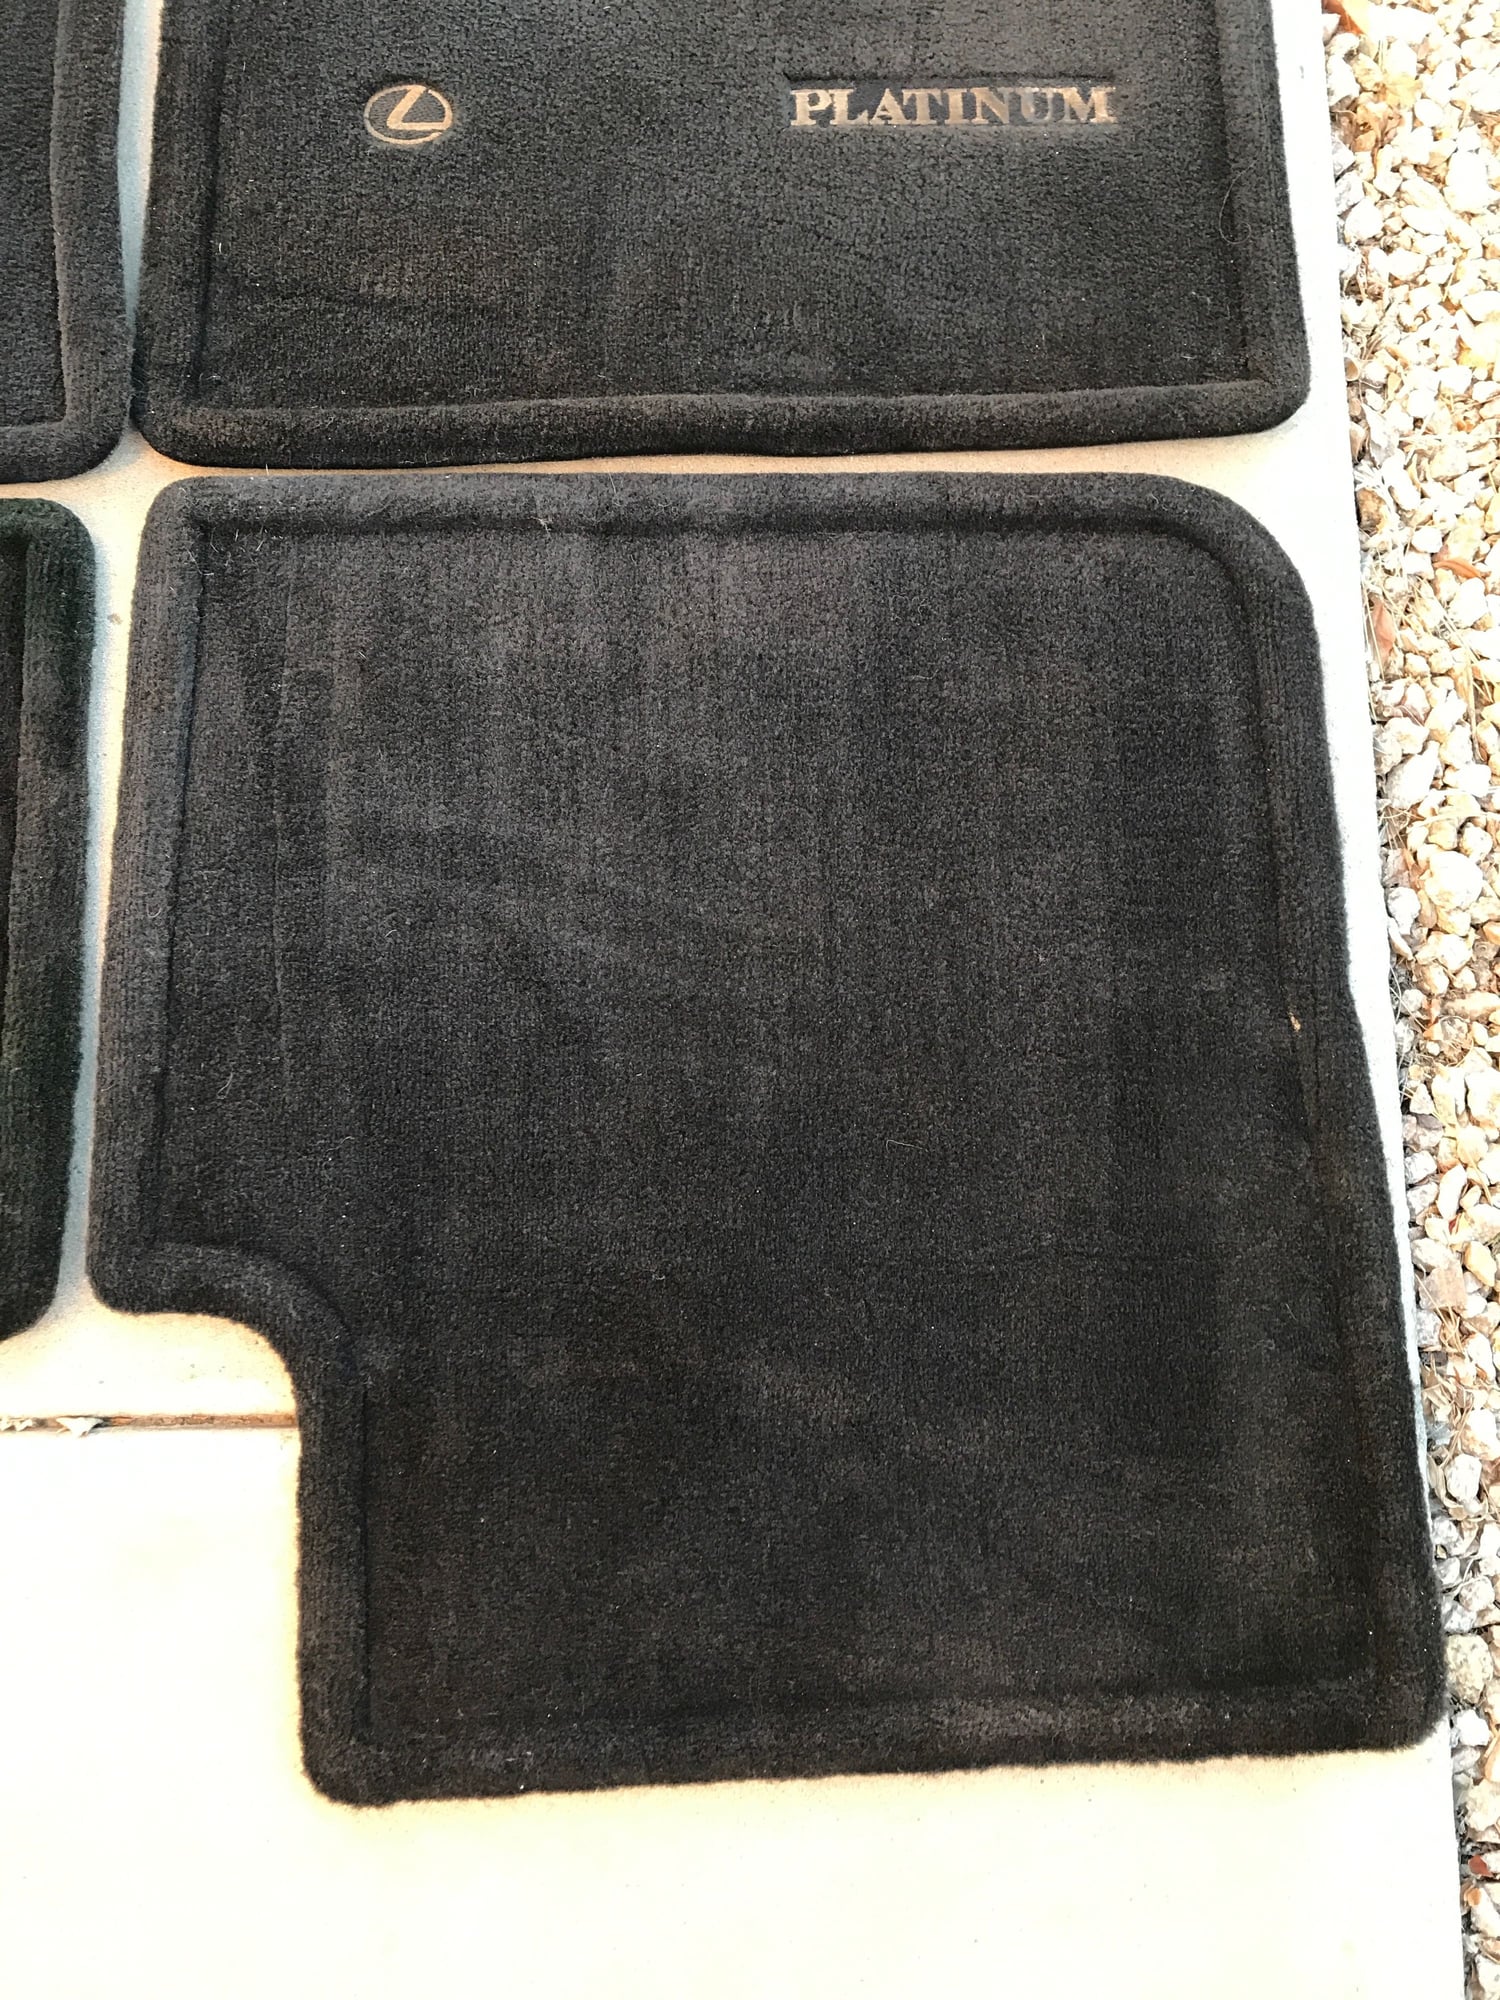 Interior/Upholstery - ES300 Platinum Edition Black Floor Mat Set - Used - 1997 to 2000 Lexus ES300 - Chandler, AZ 85224, United States